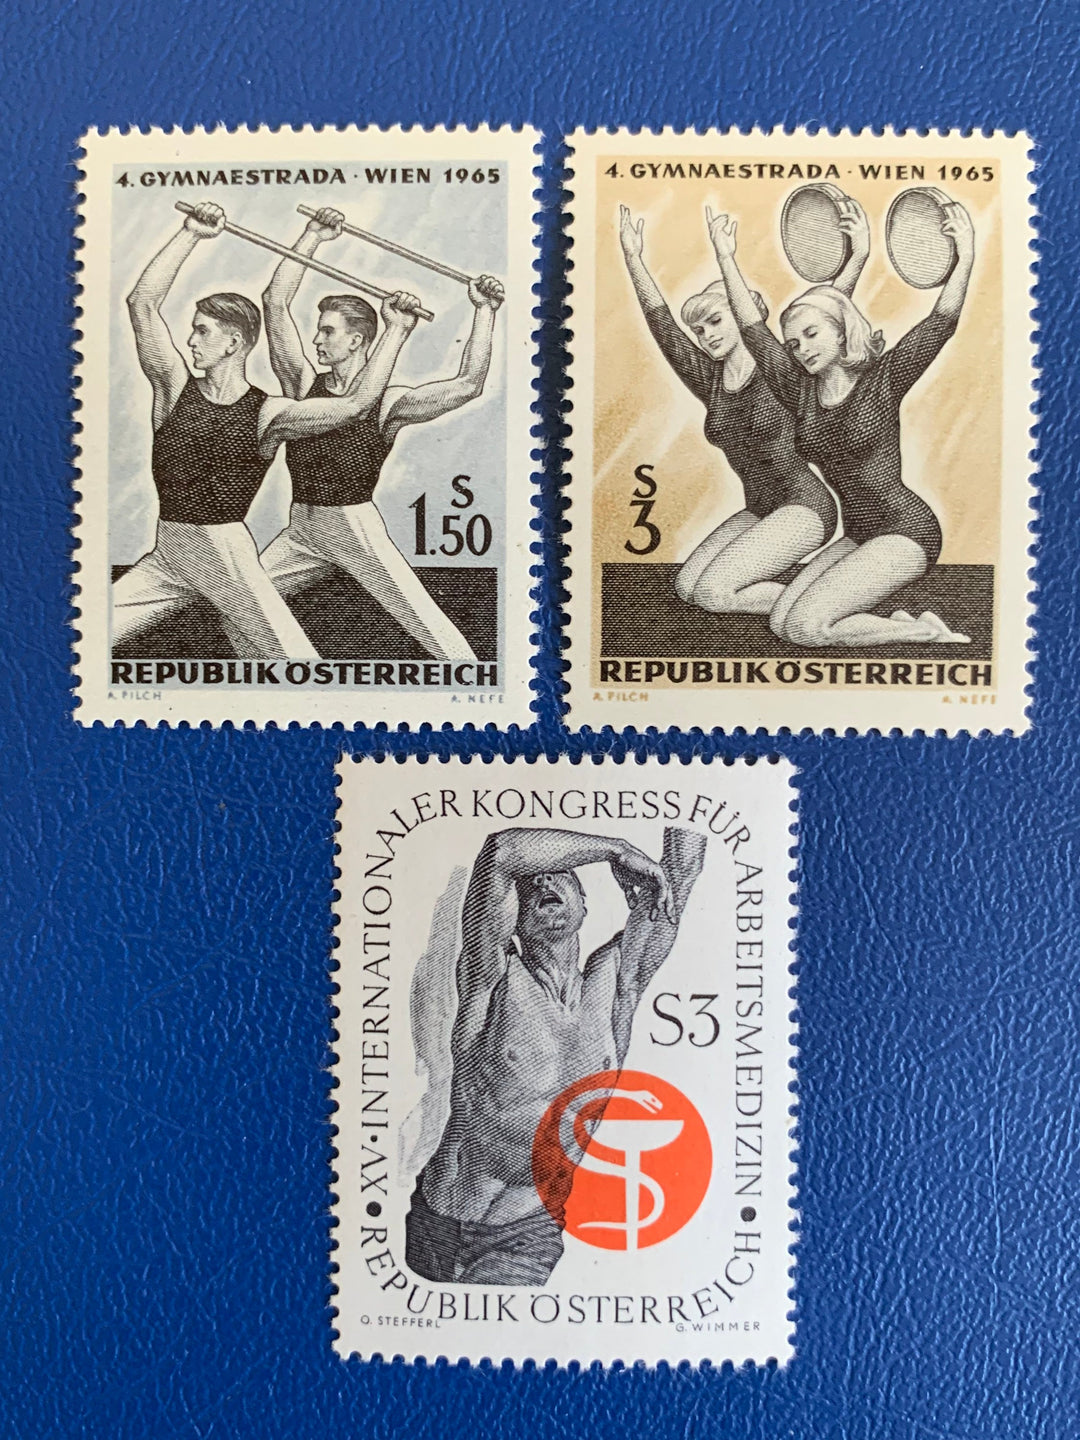 Austria - Original Vintage Postage Stamps - 1965/66 Sports & Medicine - for the collector, artist or crafter